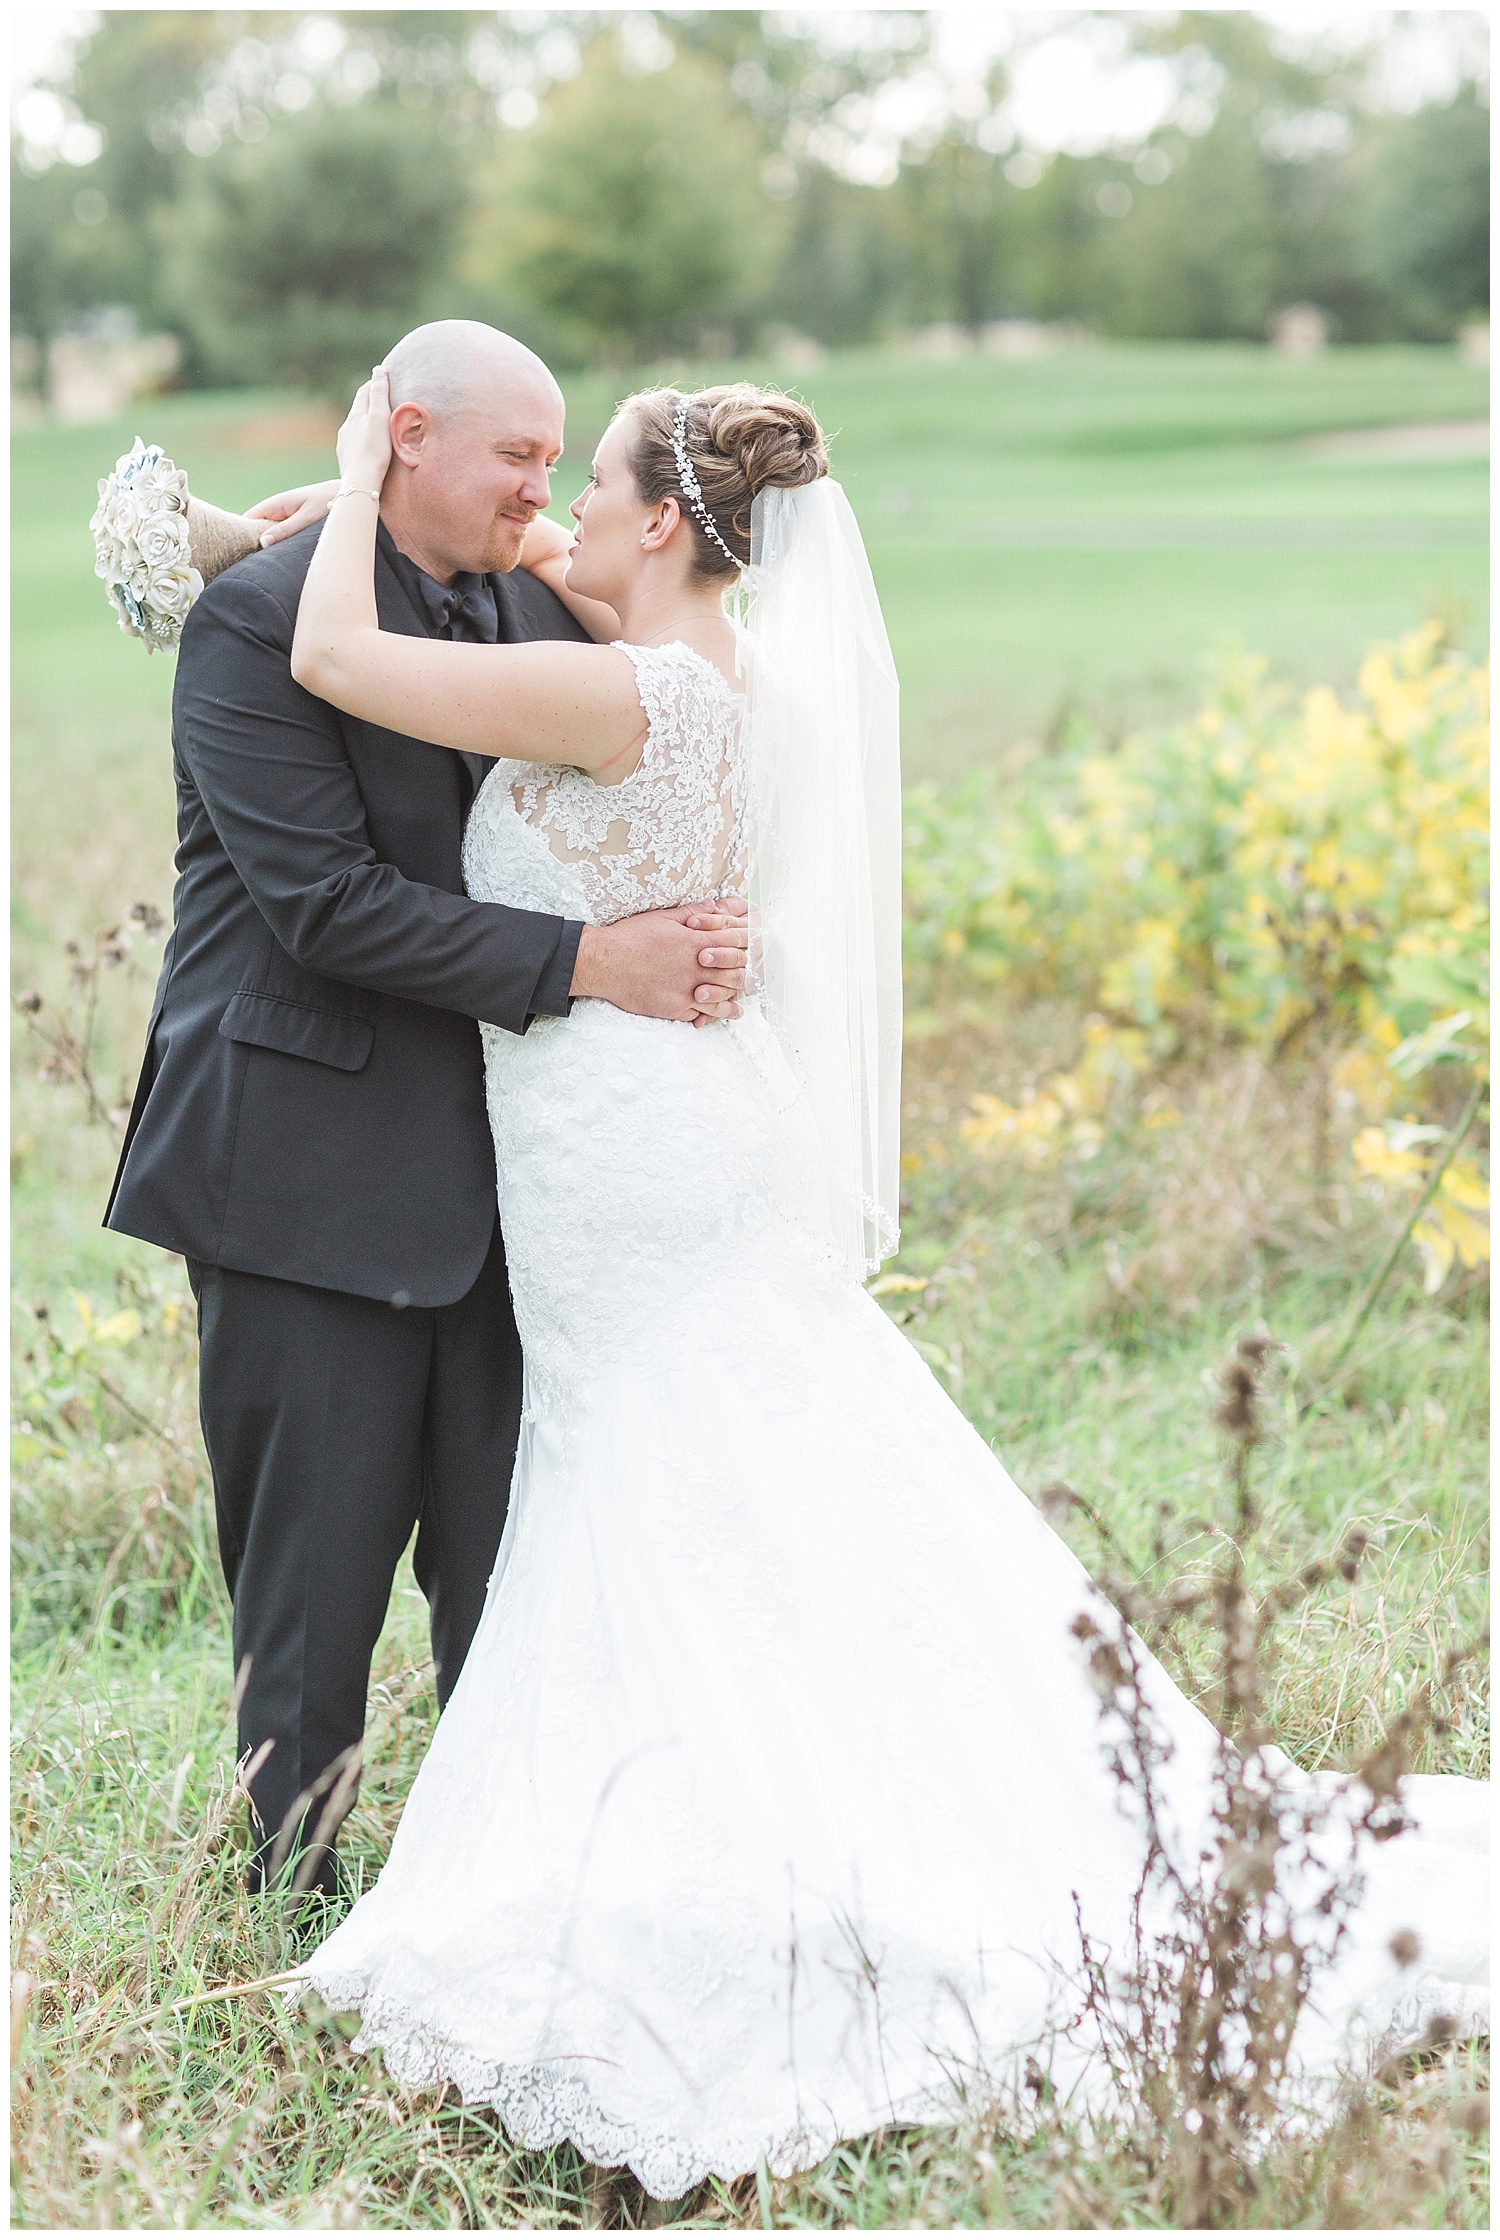 Jessica and Scott McKay - Terry Hills Golf Course - Batavia NY - Lass and Beau-721_Buffalo wedding photography.jpg